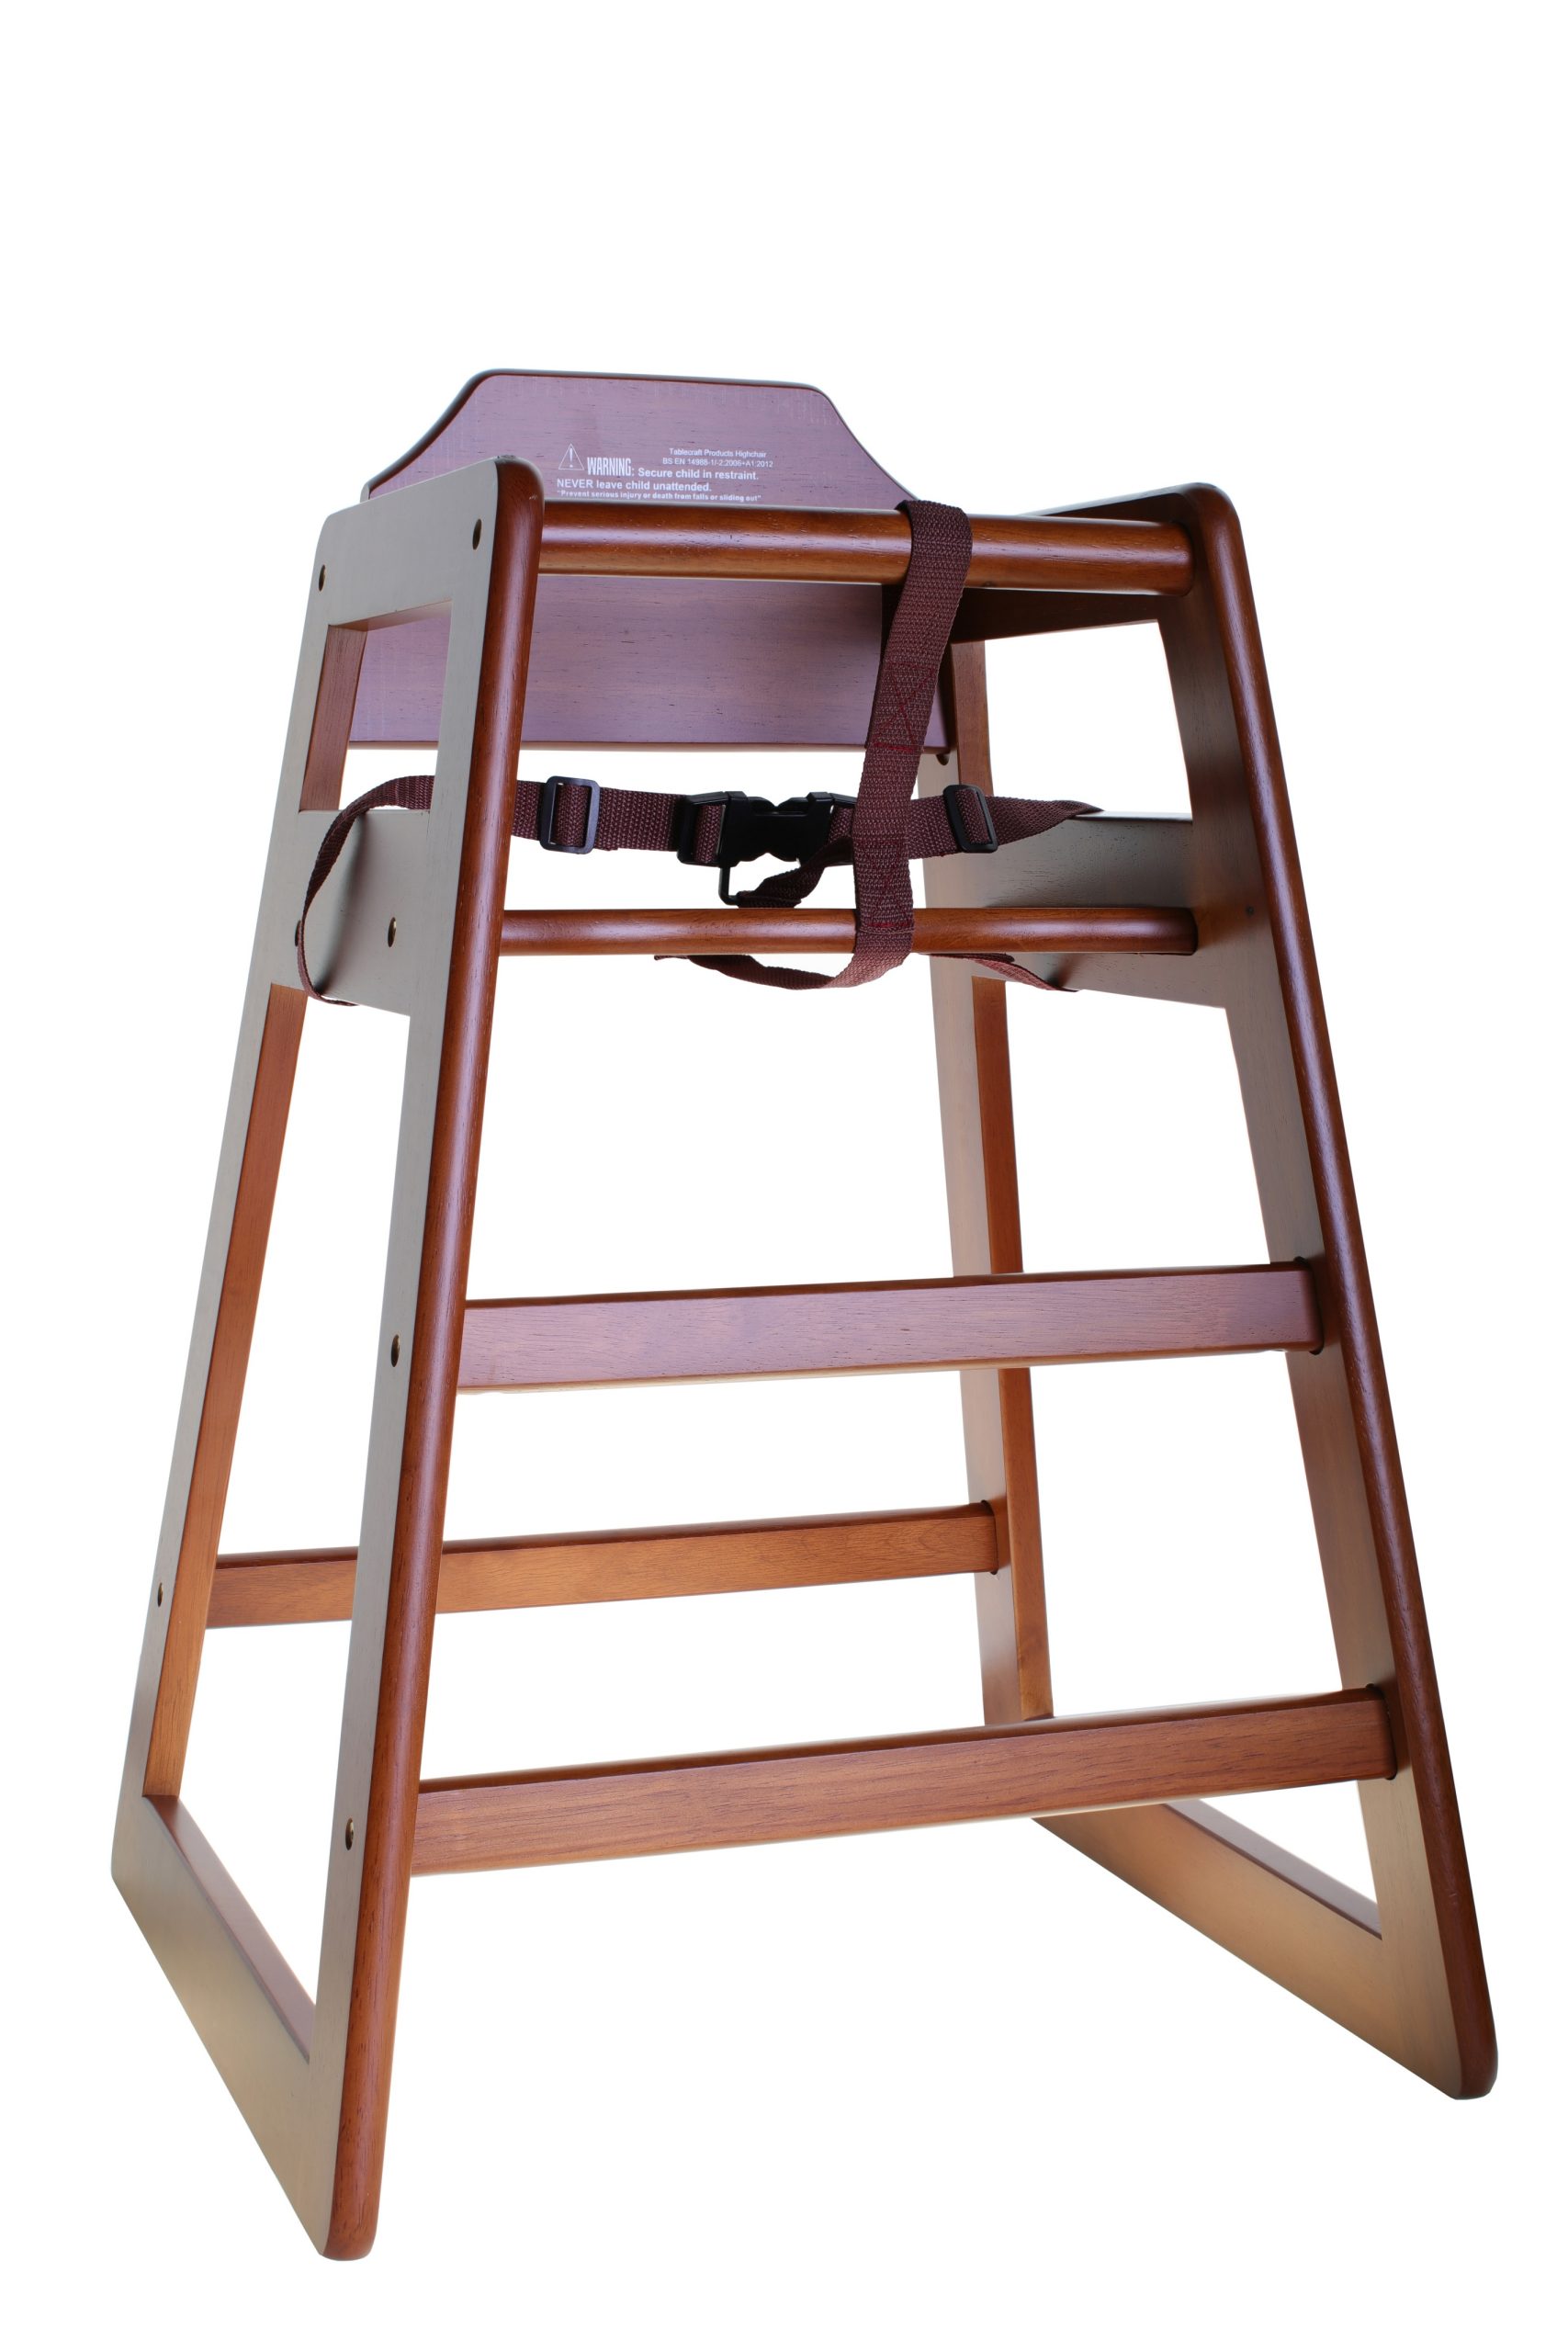 66EU ΠΑΙΔΙΚΟ ΚΑΡΕΚΛΑΚΙ Ξύλινο (επαγγελματικής χρήσης) High Chair TABLECRAFT